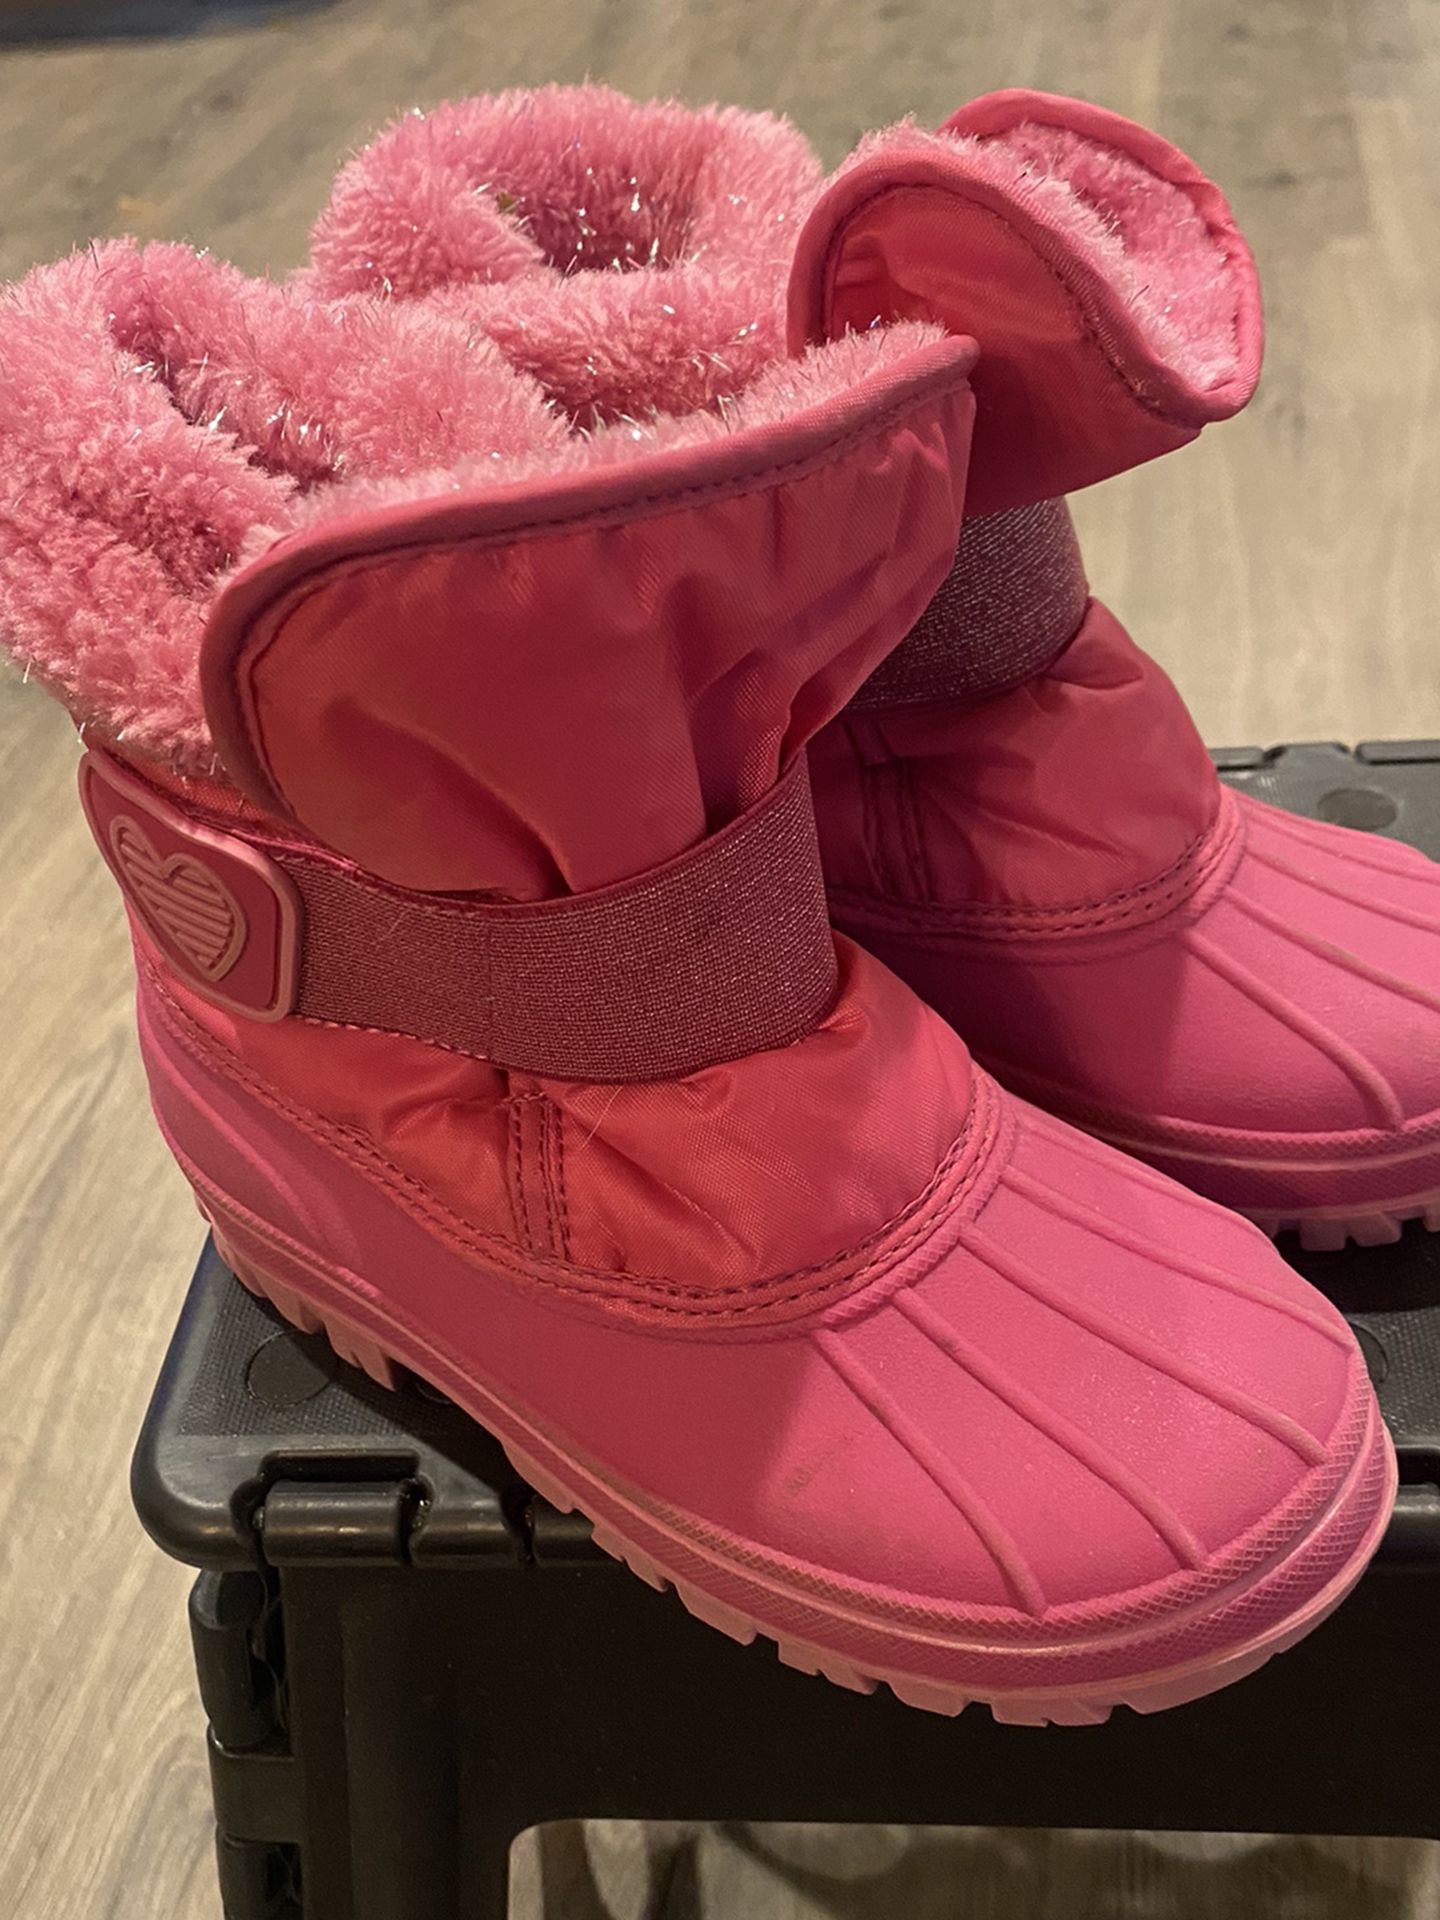 Kids size 12 snow boots